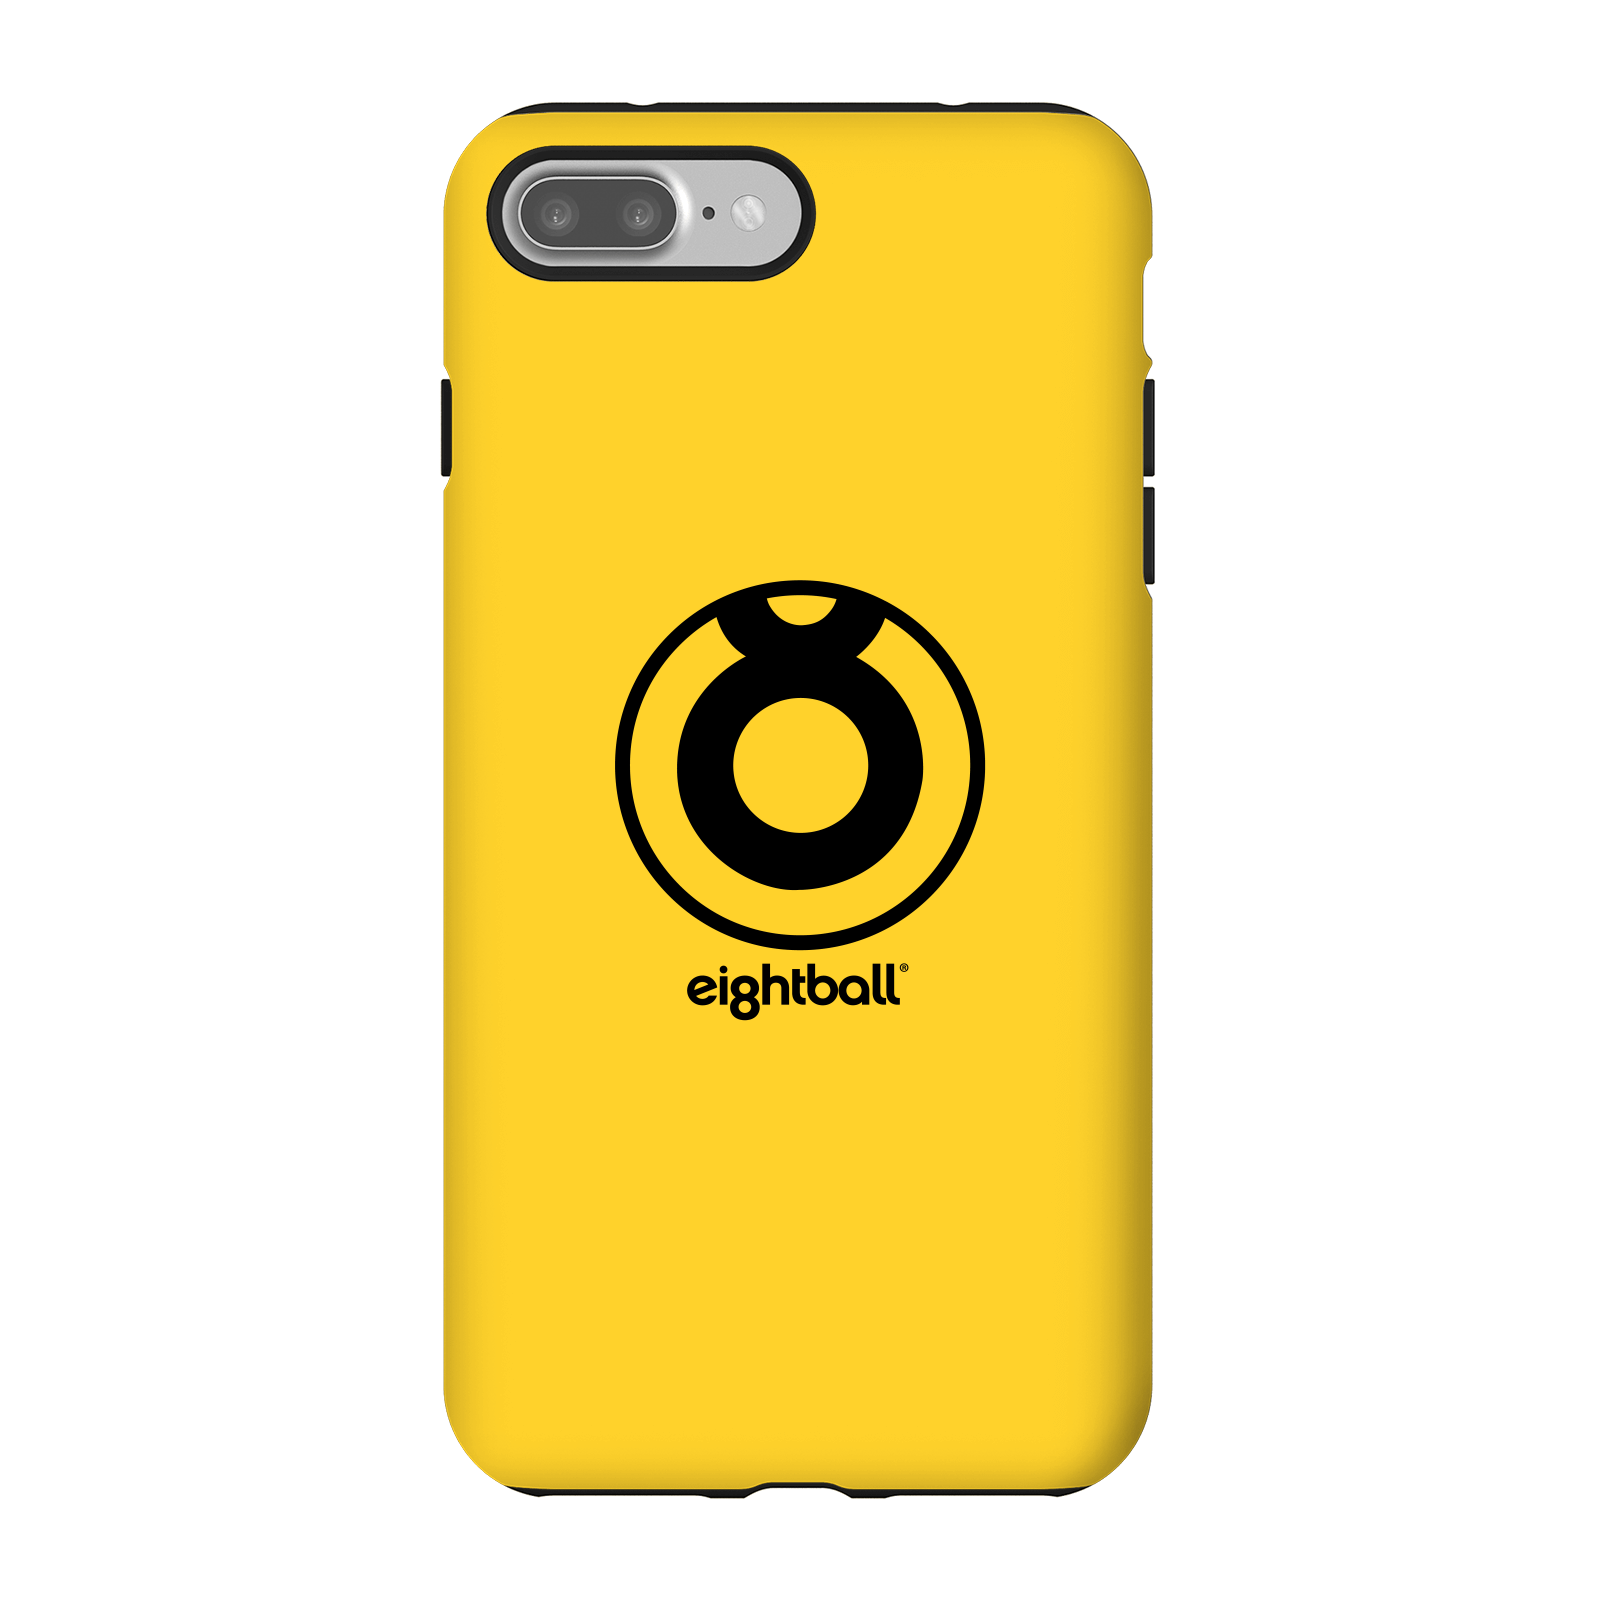 Funda Móvil Ei8htball Large Circle Logo para iPhone y Android - iPhone 7 Plus - Carcasa doble capa - Mate